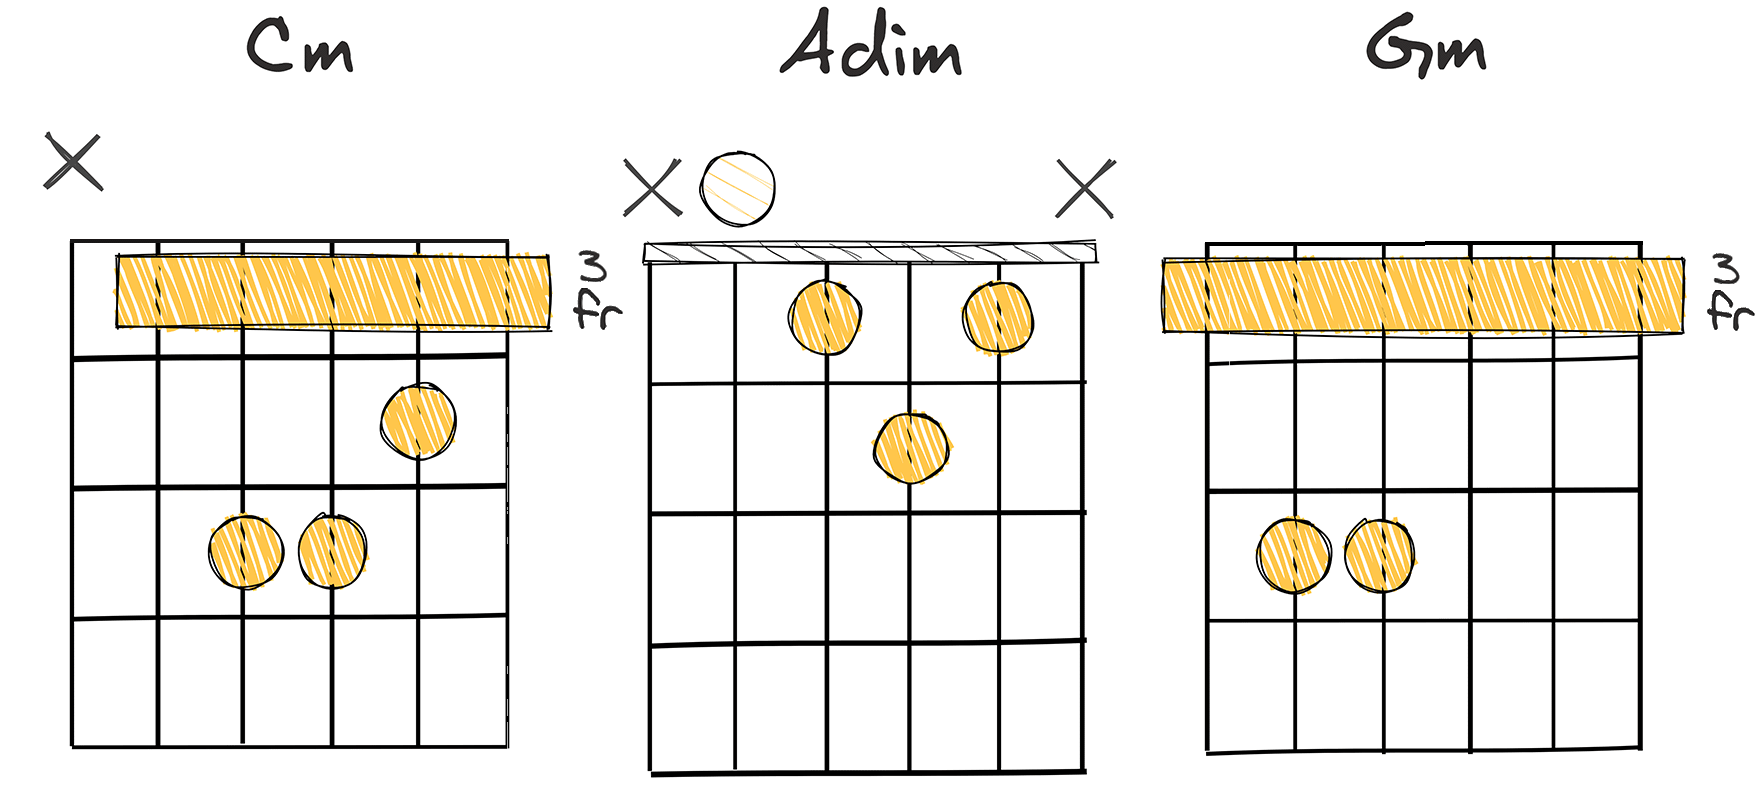 iv - ii - i (4-2-1) chords diagram